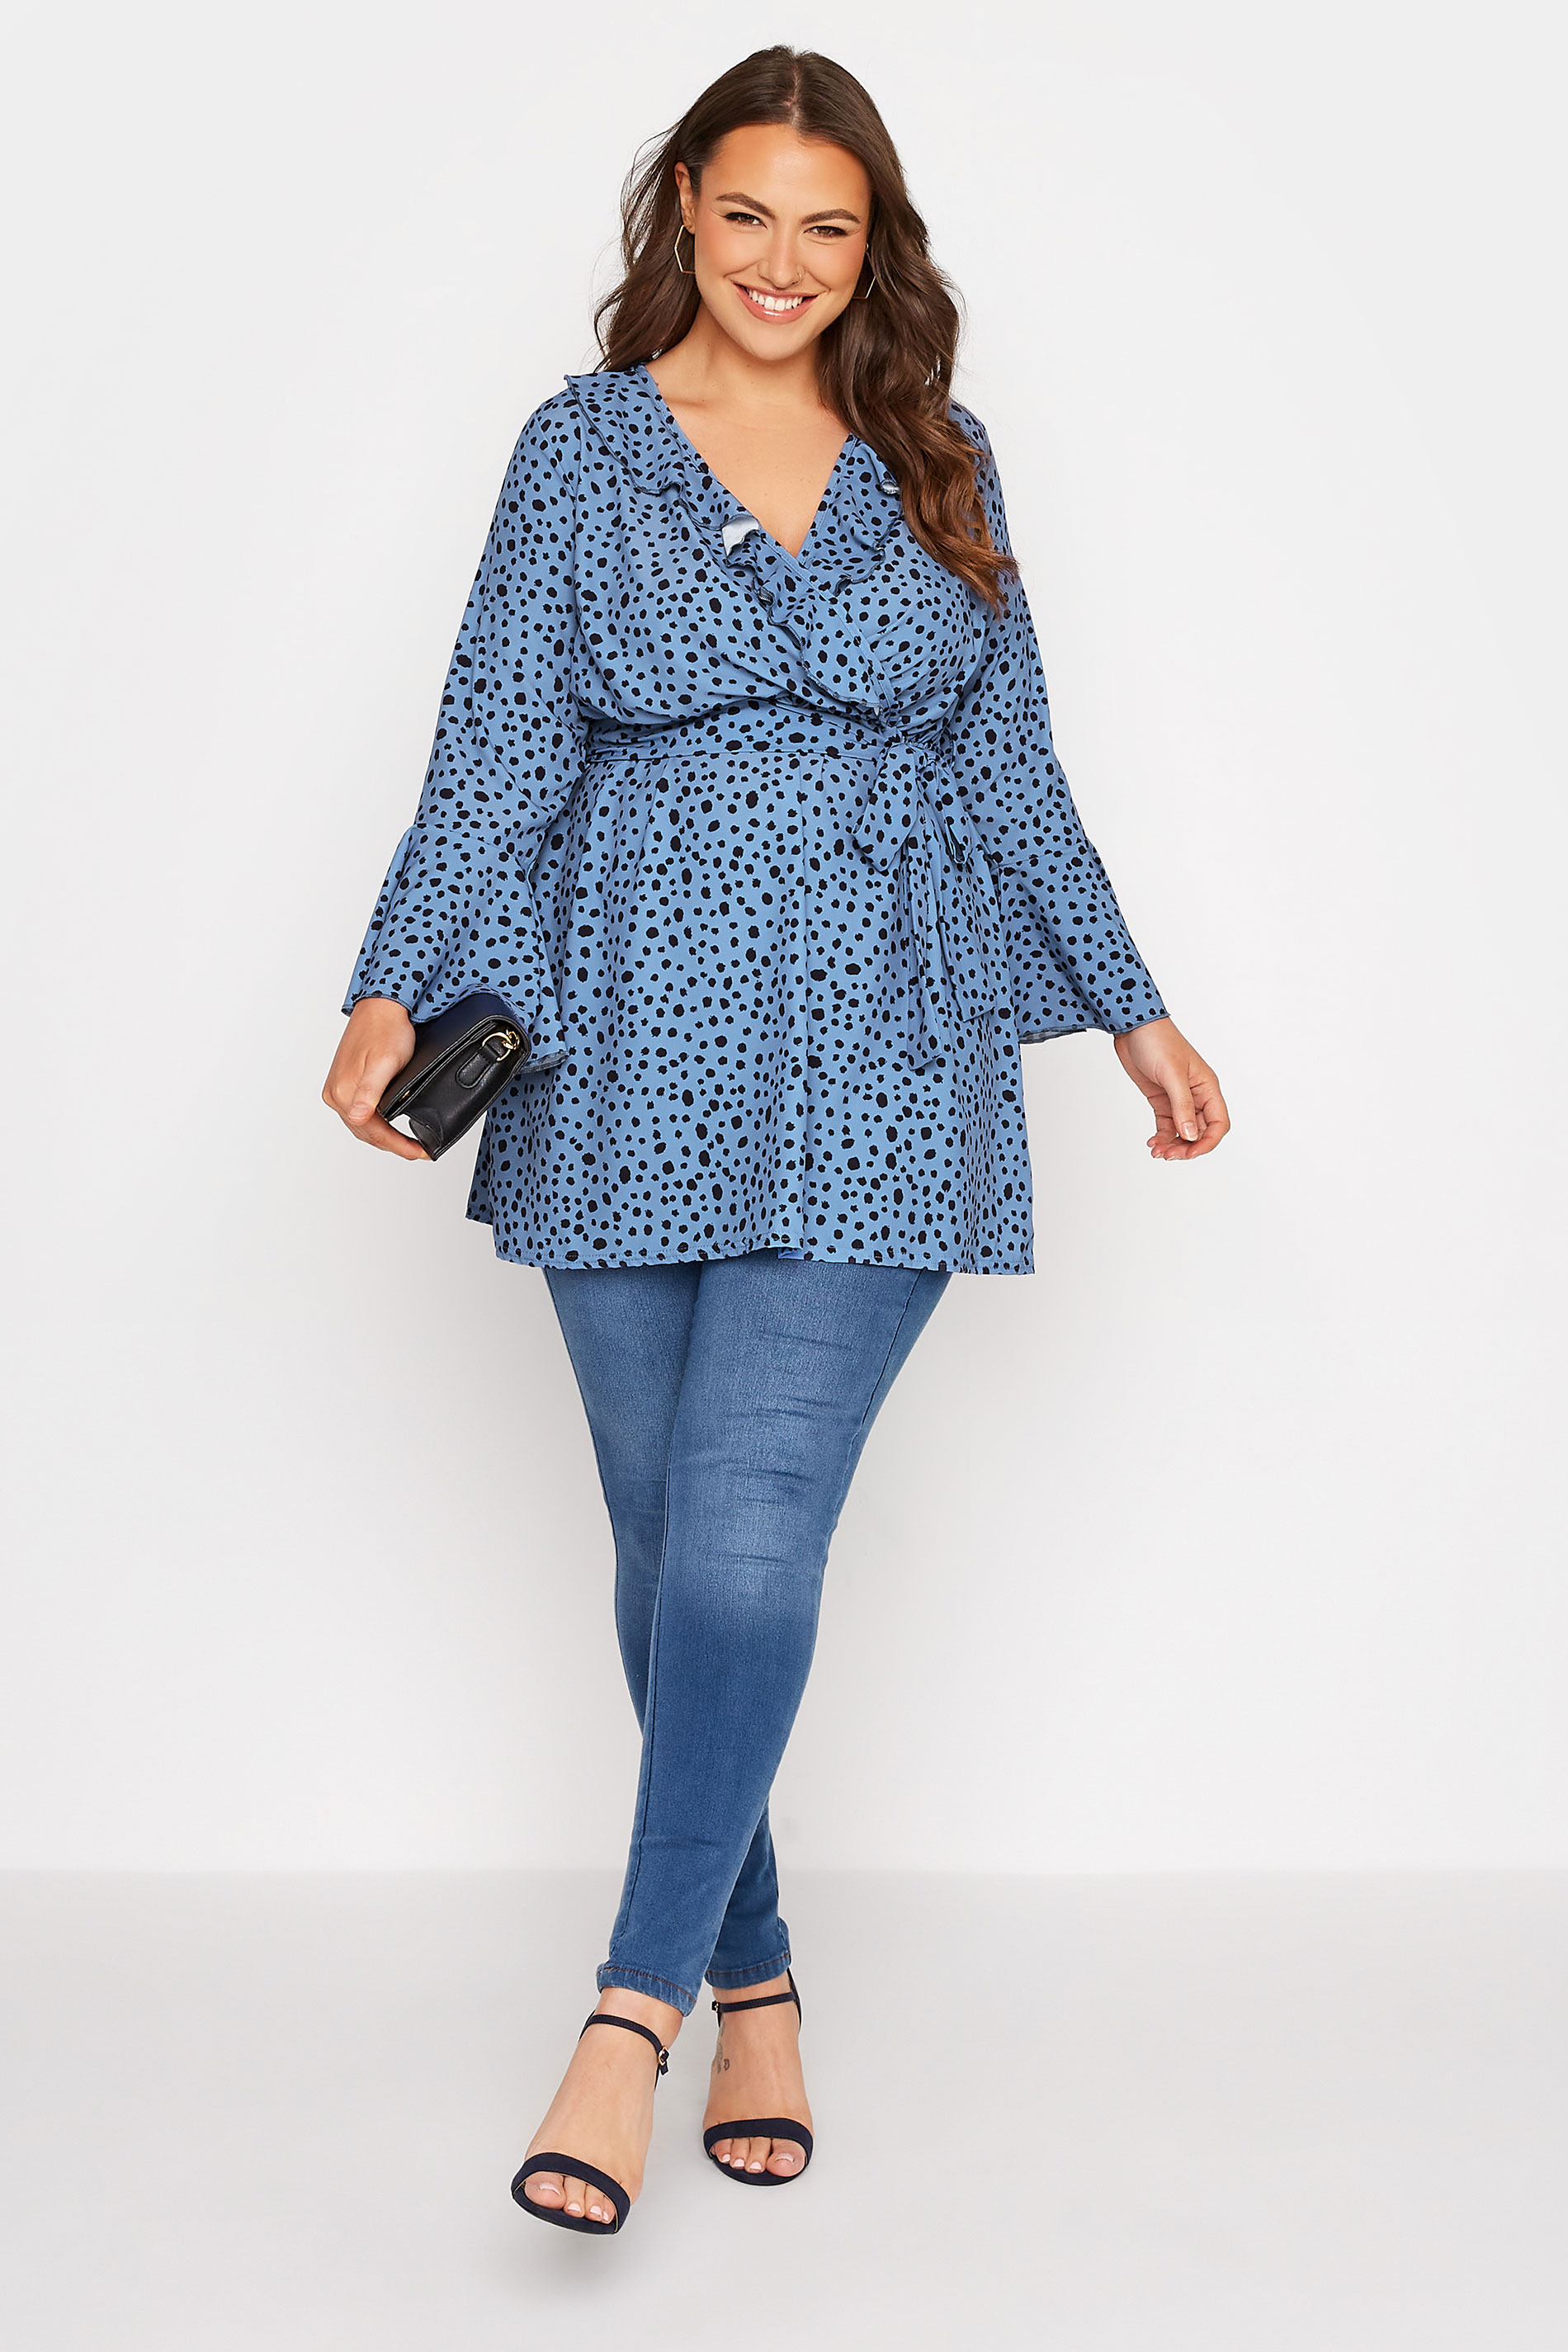 YOURS LONDON Plus Size Blue Dalmatian Ruffle Wrap Top | Yours Clothing 2